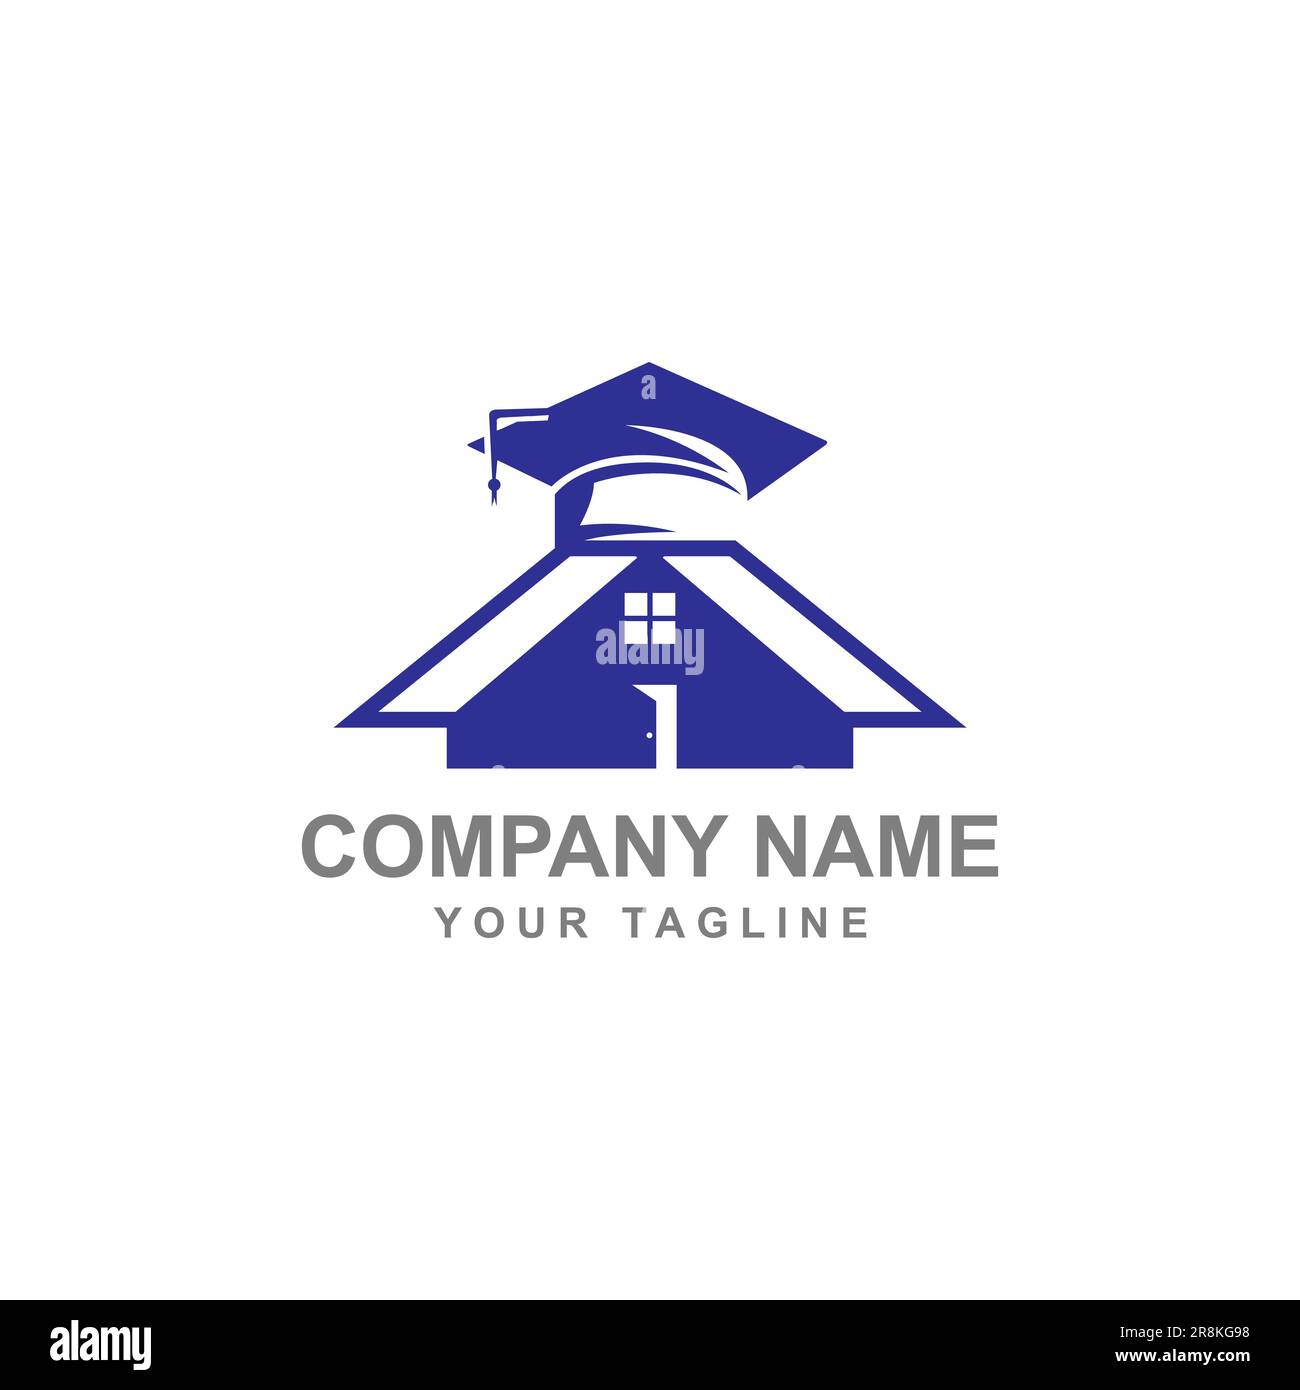 College, Graduate cap, Campus, Education logo design and house building logo.EPS 10 Stock Vector